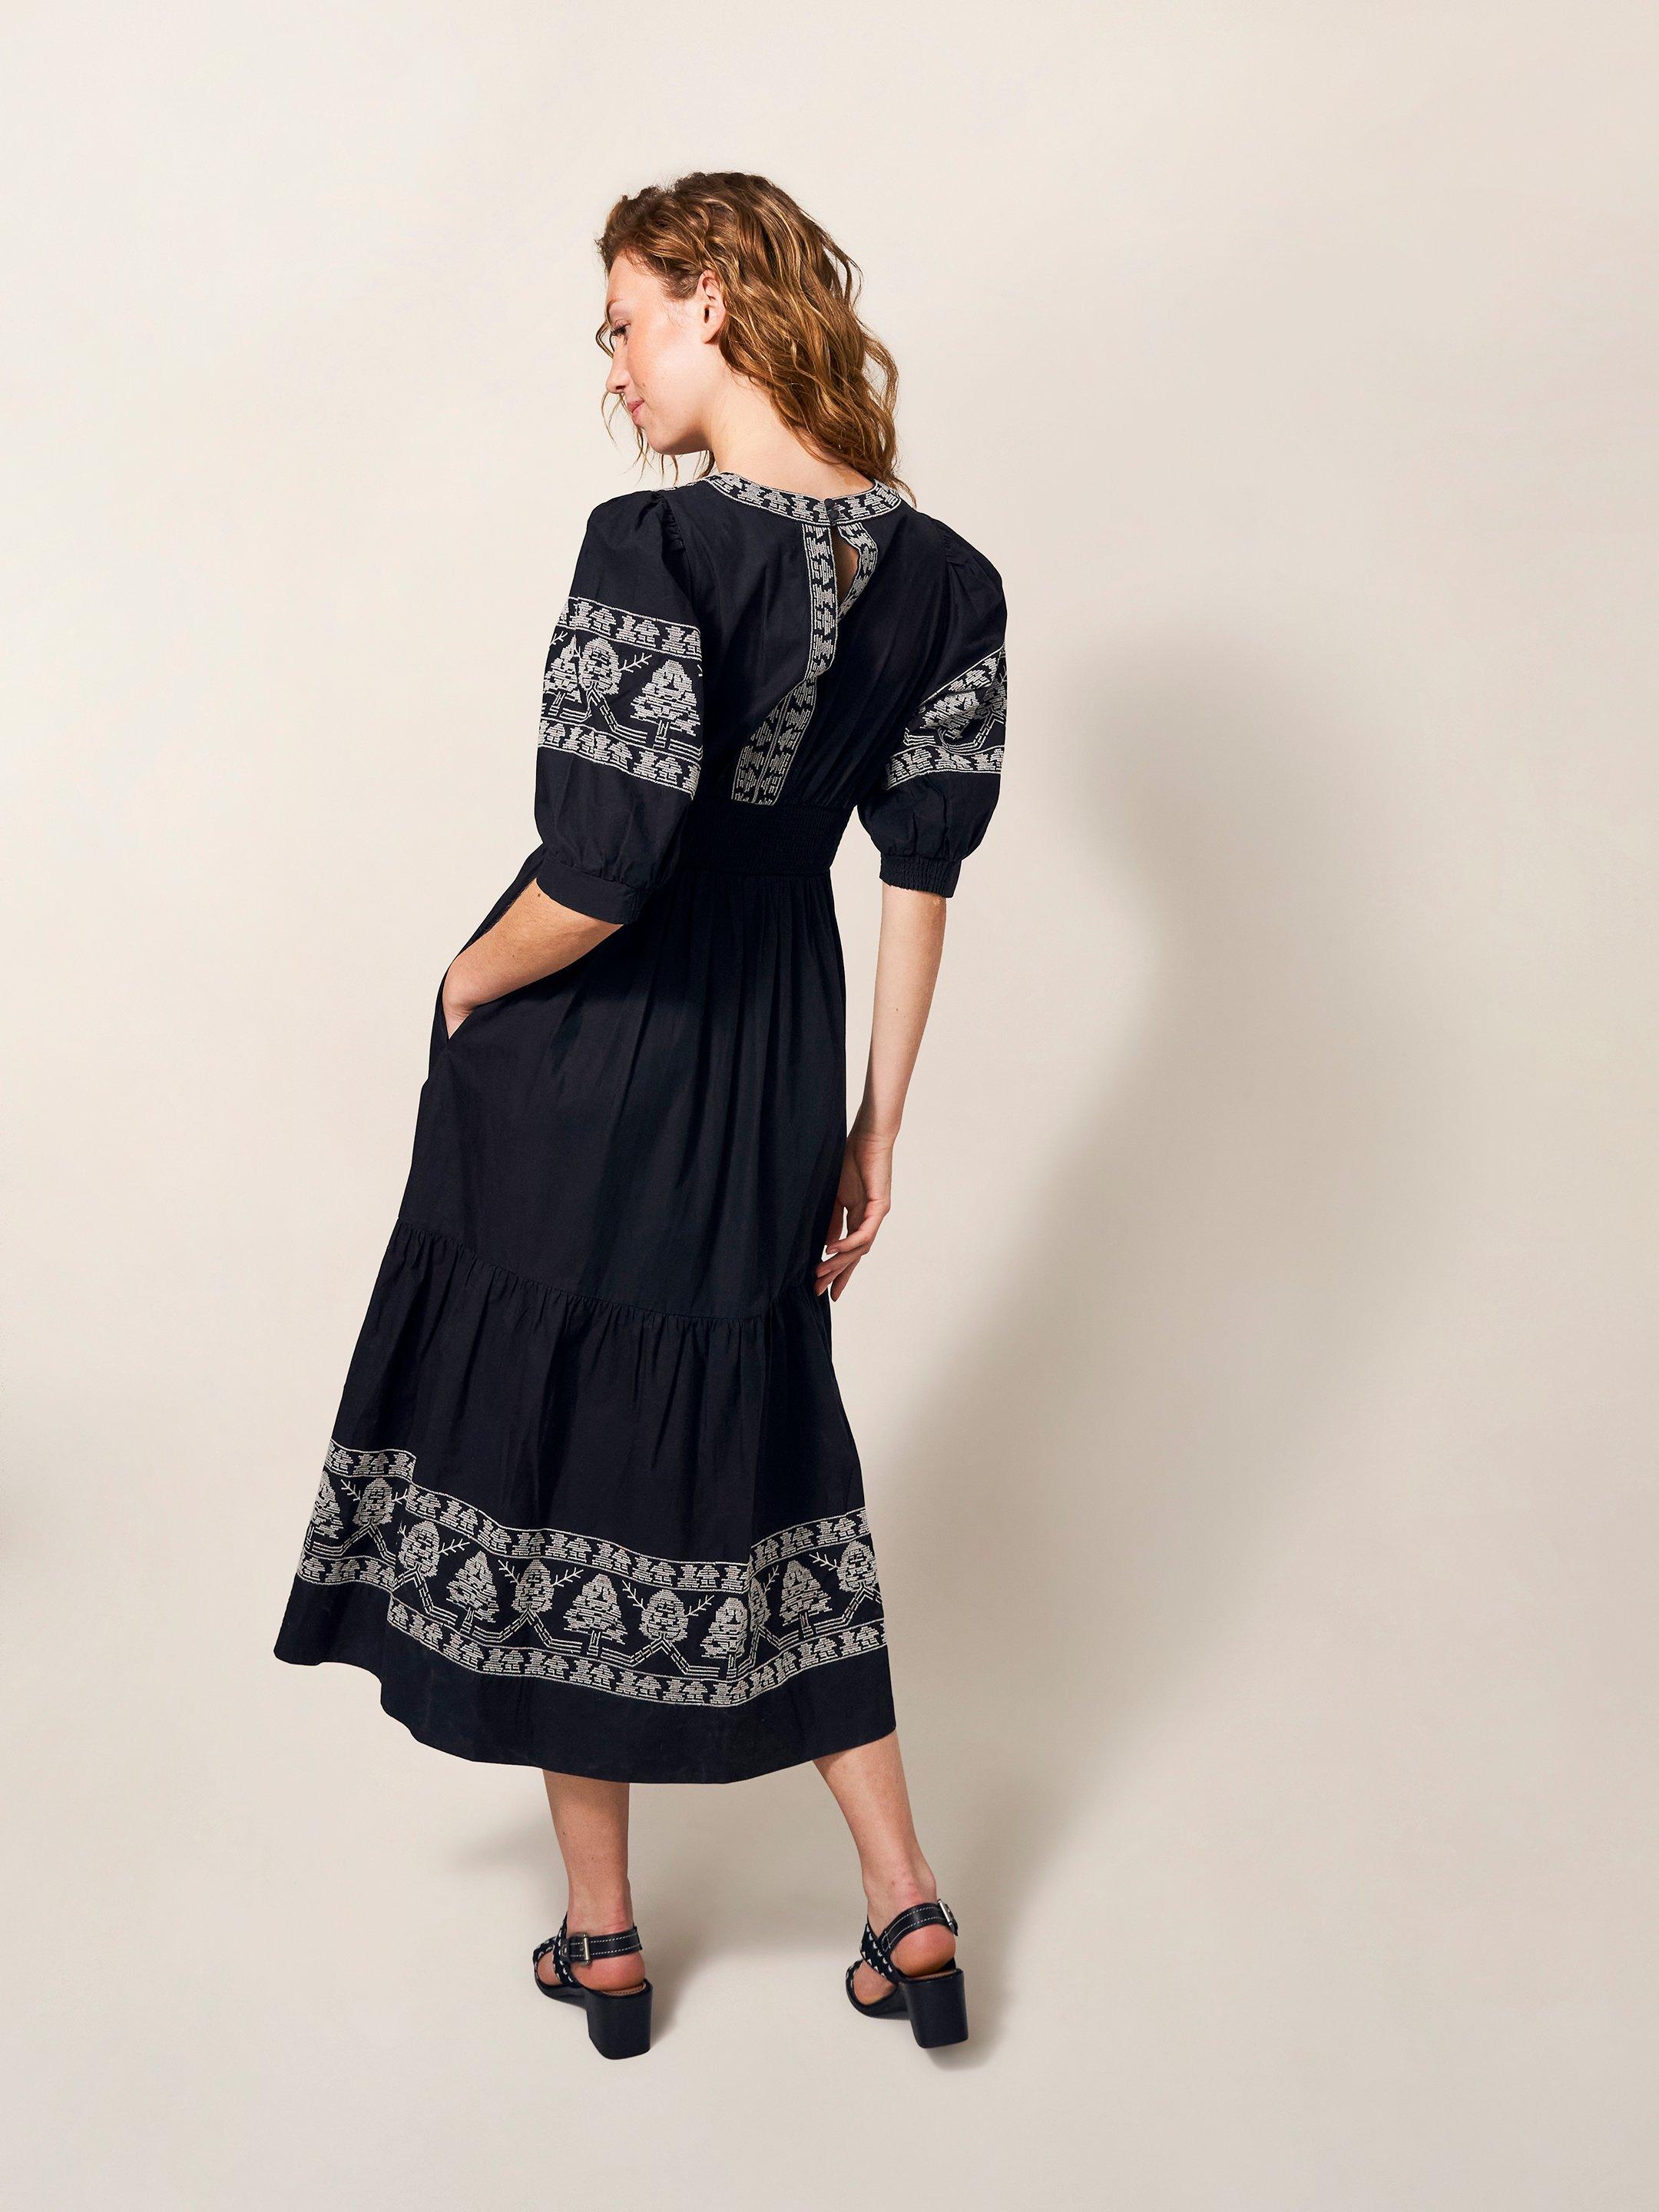 Dulcie Embroidered Midi Dress in BLK MLT - MODEL BACK